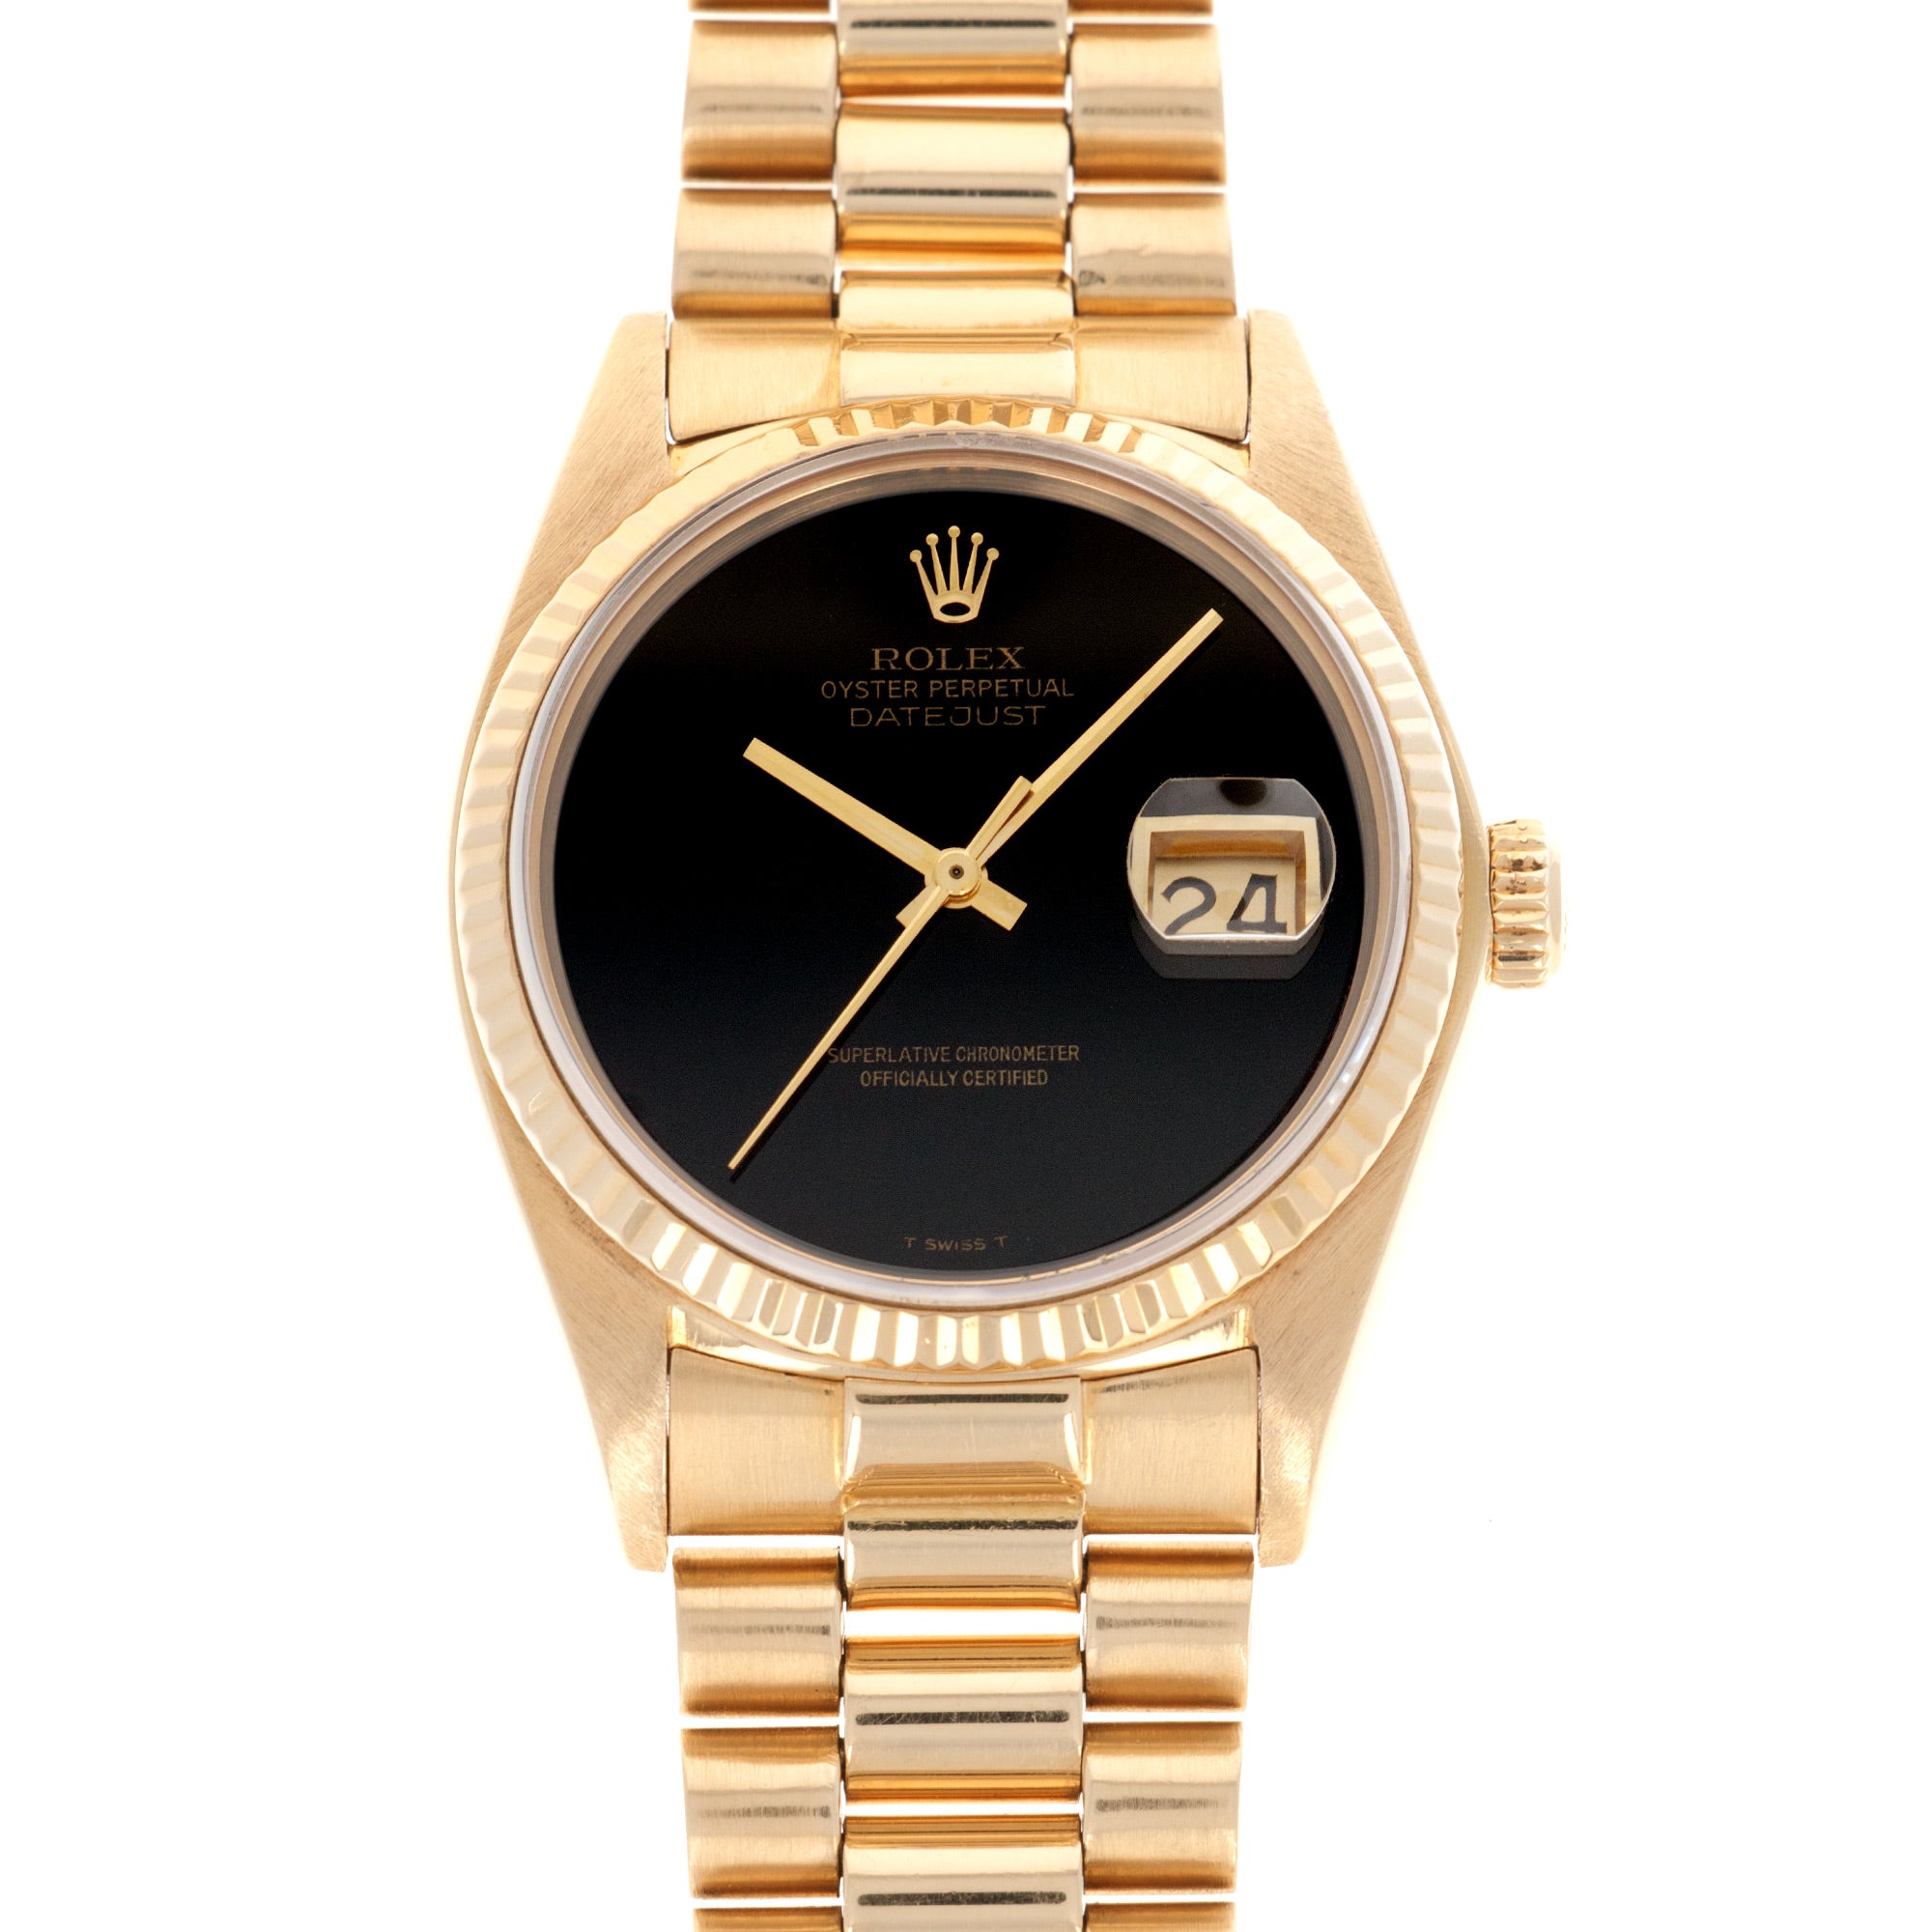 Rolex - Rolex Yellow Gold Datejust Onyx Dial Watch, Ref. 16018 - The Keystone Watches